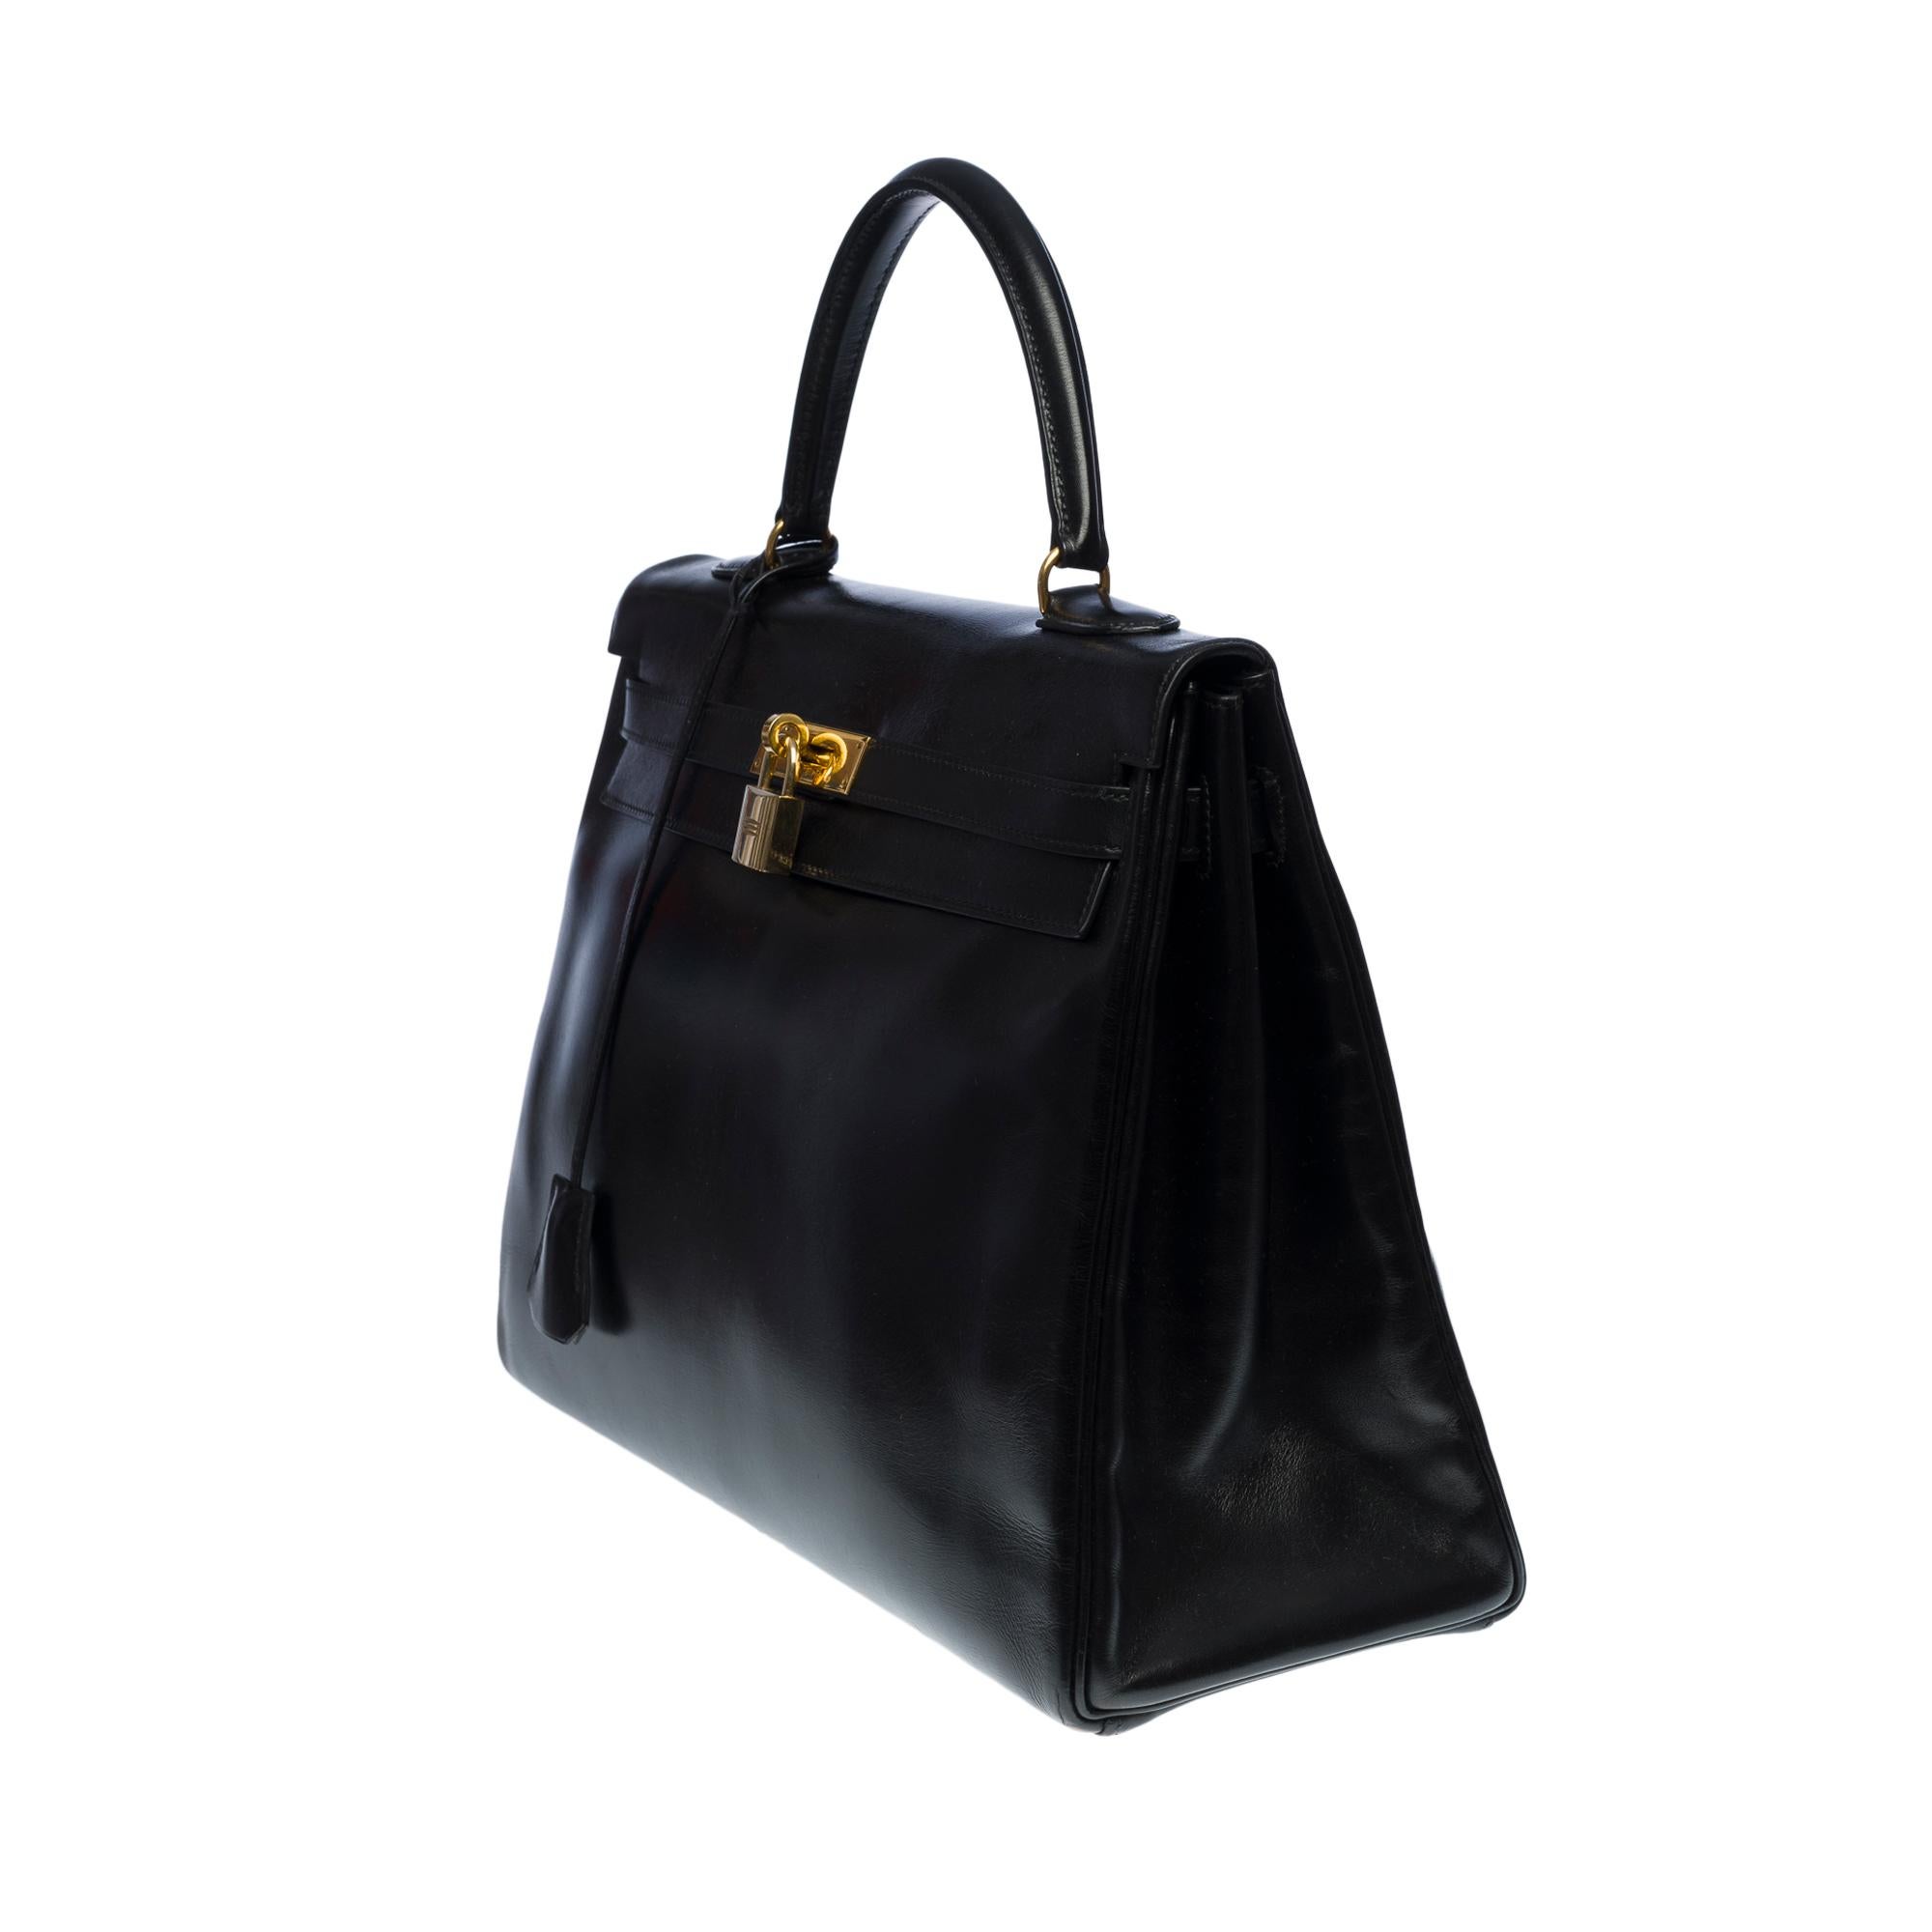 Black Gorgeous Hermès Kelly 35 retourne handbag strap in black calfskin leather, GHW